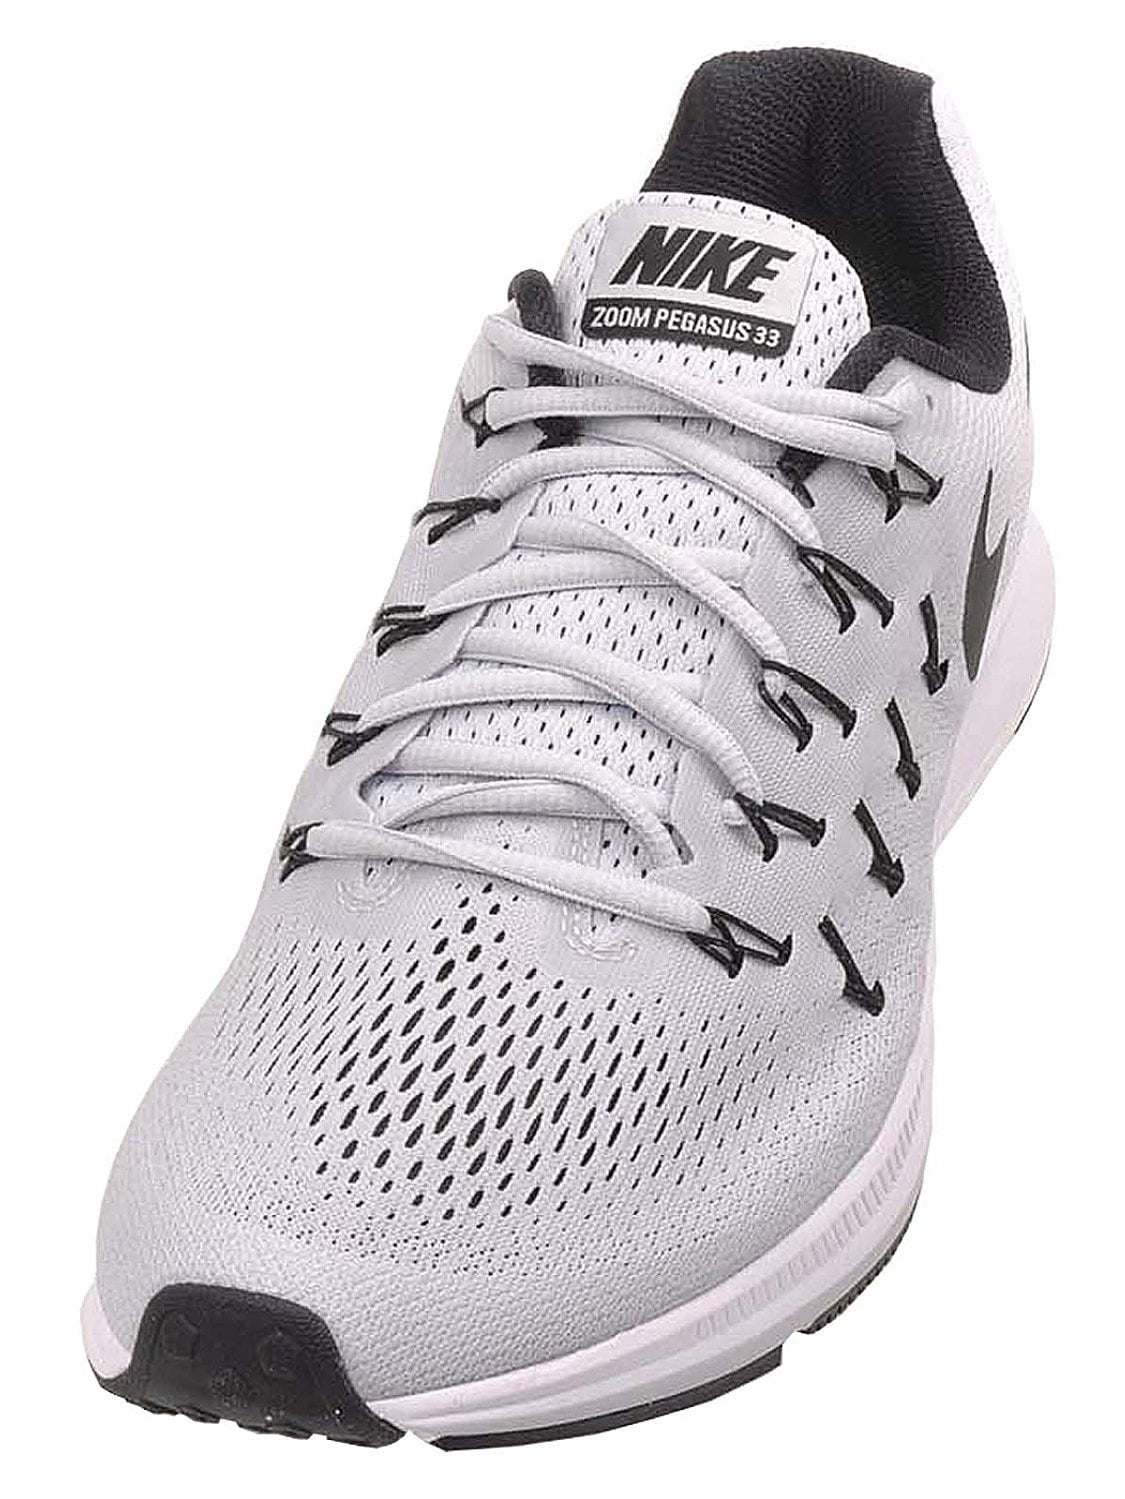 Nike Air Zoom Pegasus 33 Running Shoe - Walmart.com